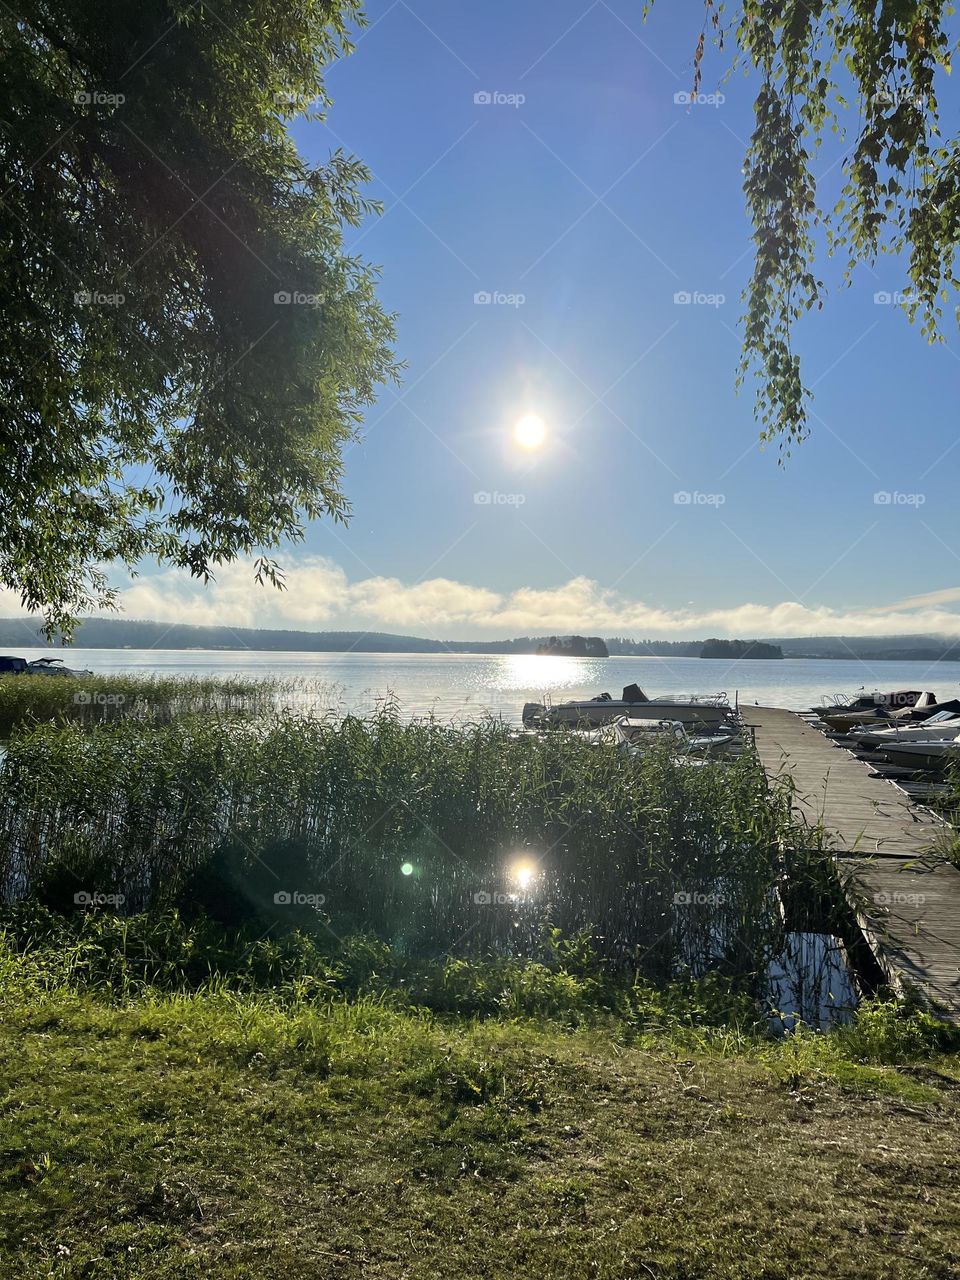 Summer in Sweden 🇸🇪